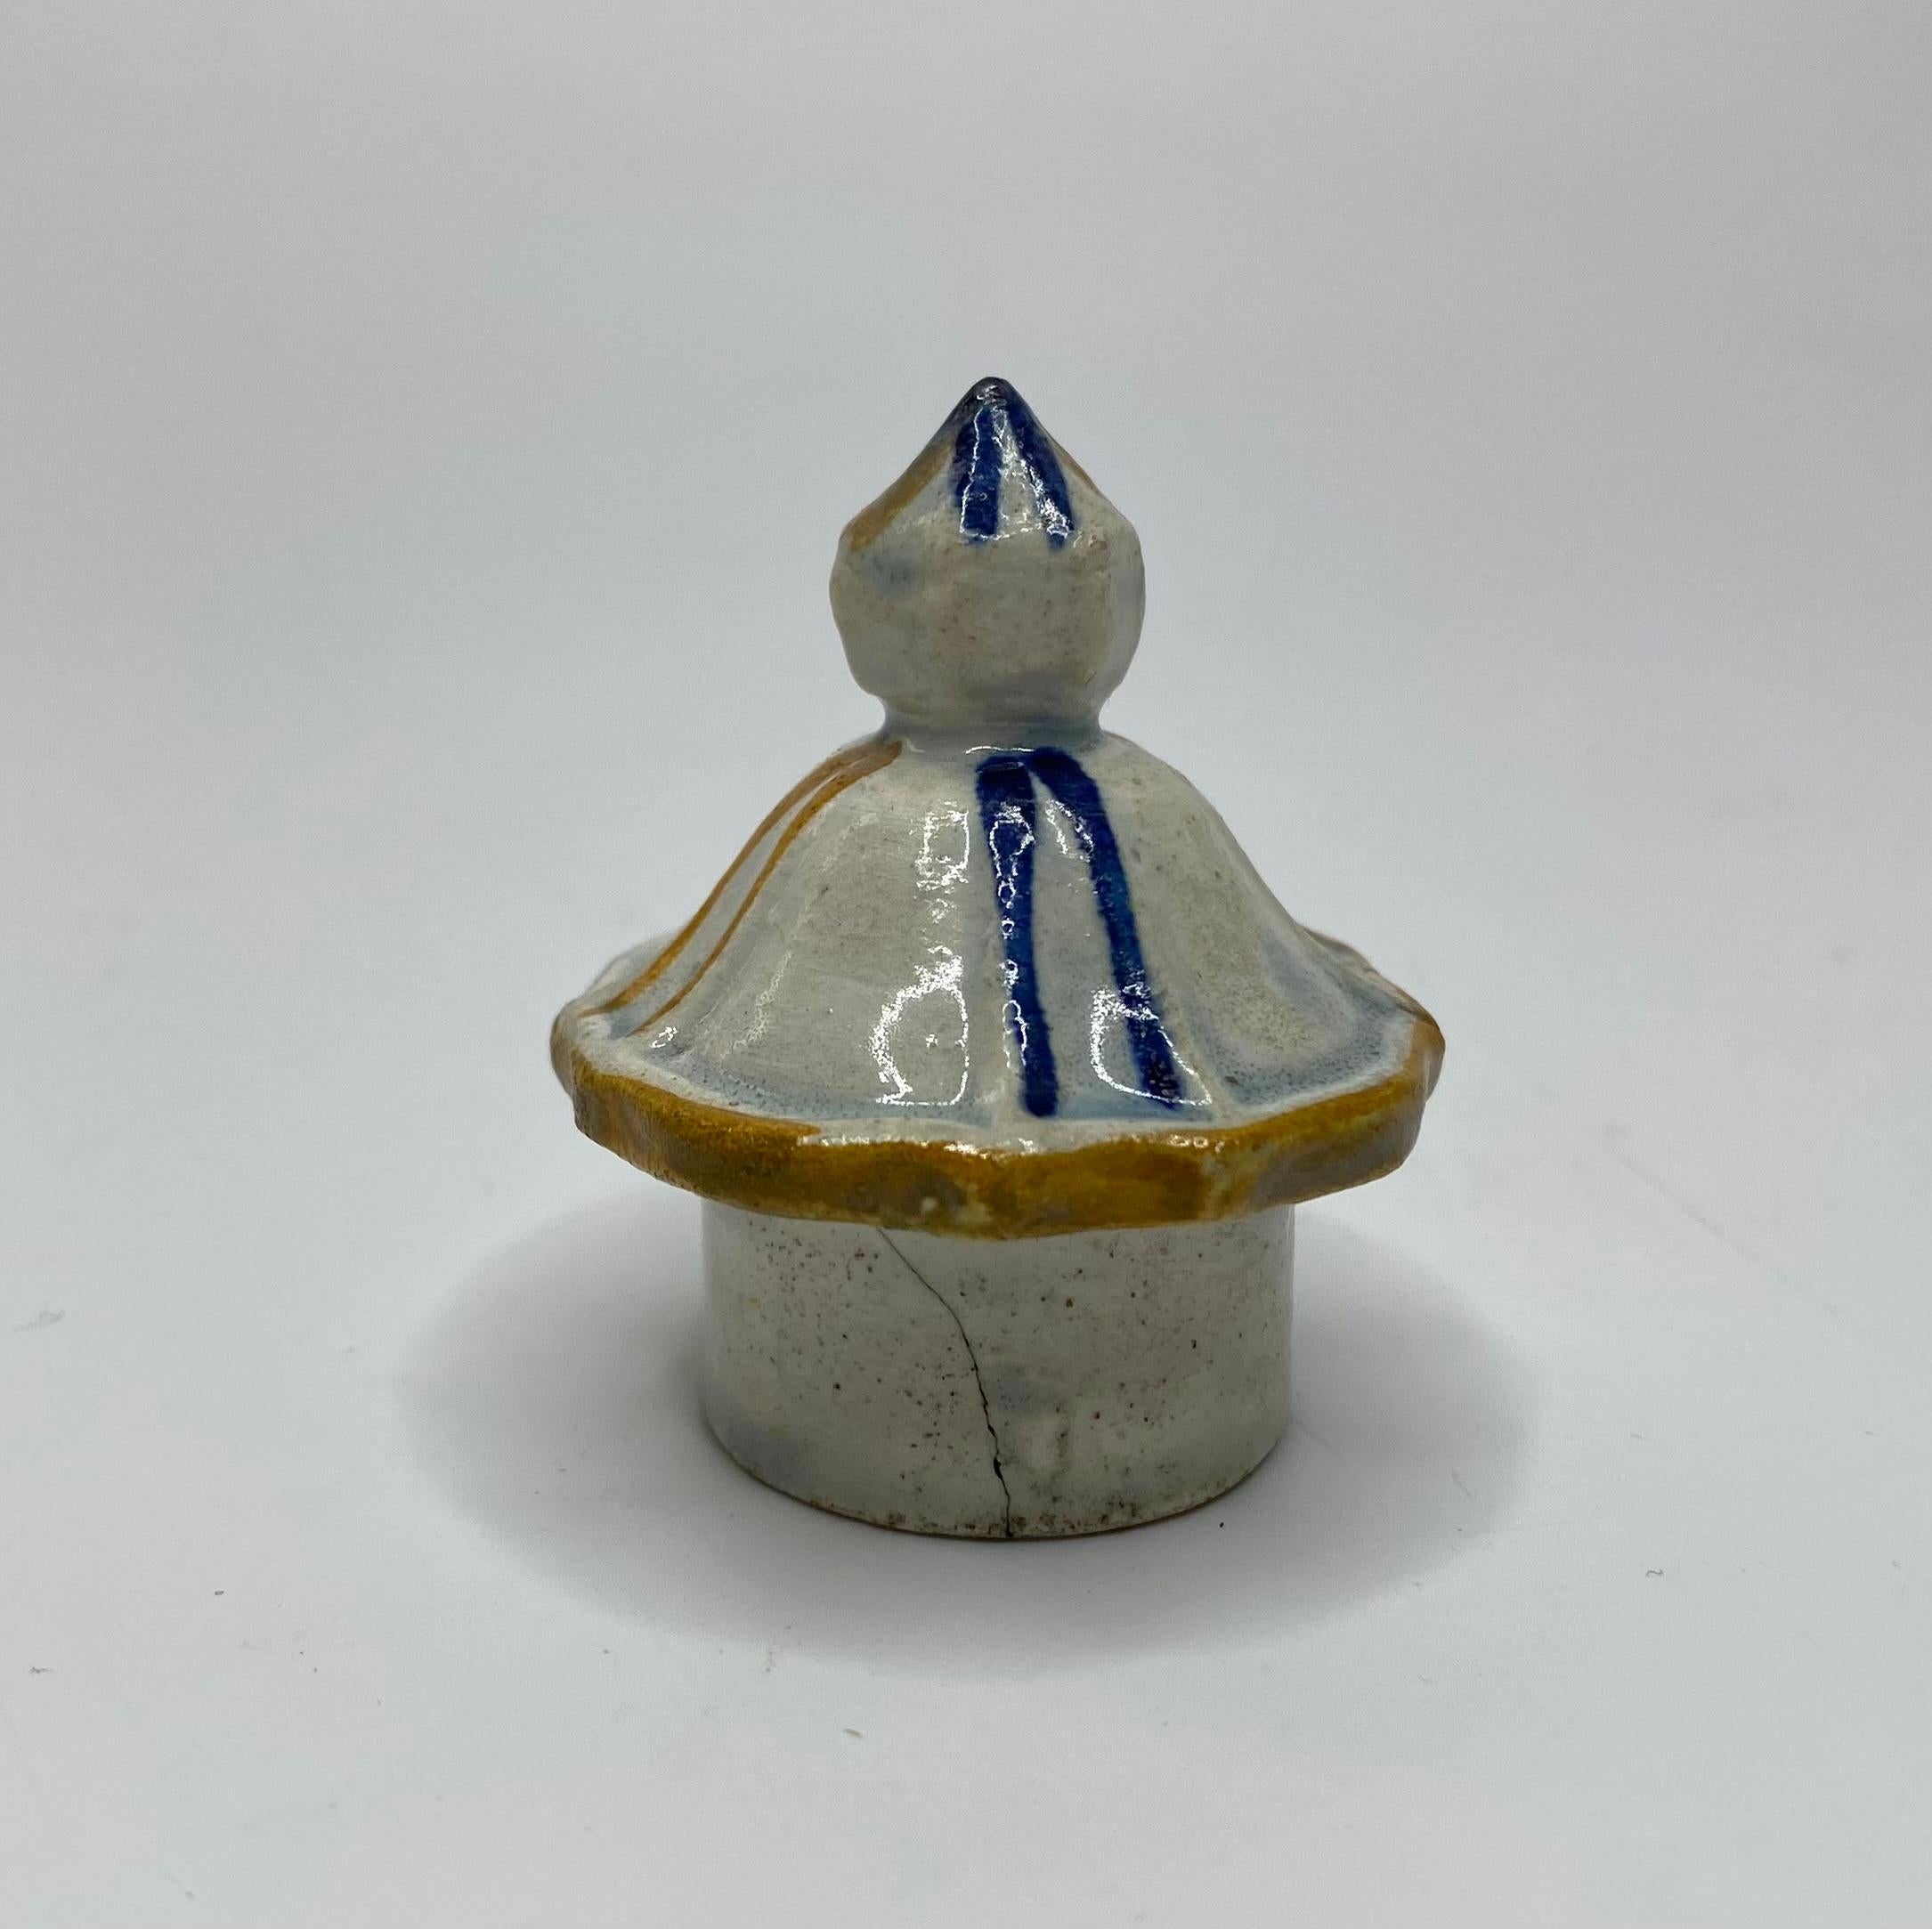 Prattware pottery ‘Macaroni’ tea caddy and cover, c. 1800. 4